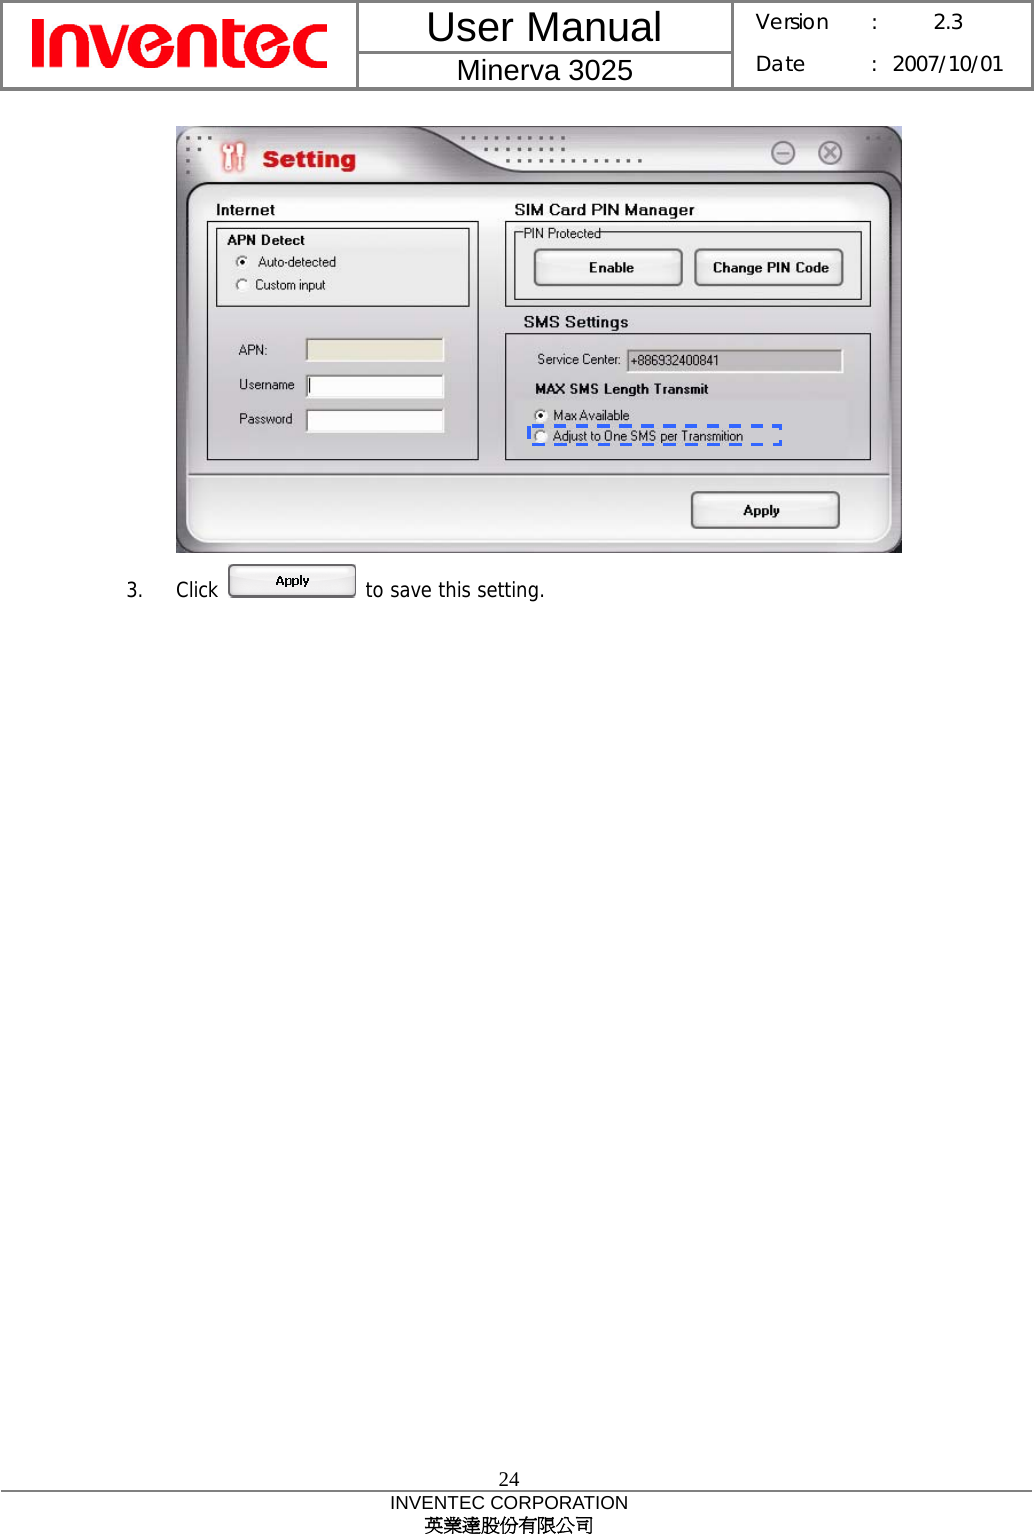 User Manual  Minerva 3025 Version :  2.3 Date : 2007/10/01  24 INVENTEC CORPORATION 英業達股份有限公司   3. Click   to save this setting.  